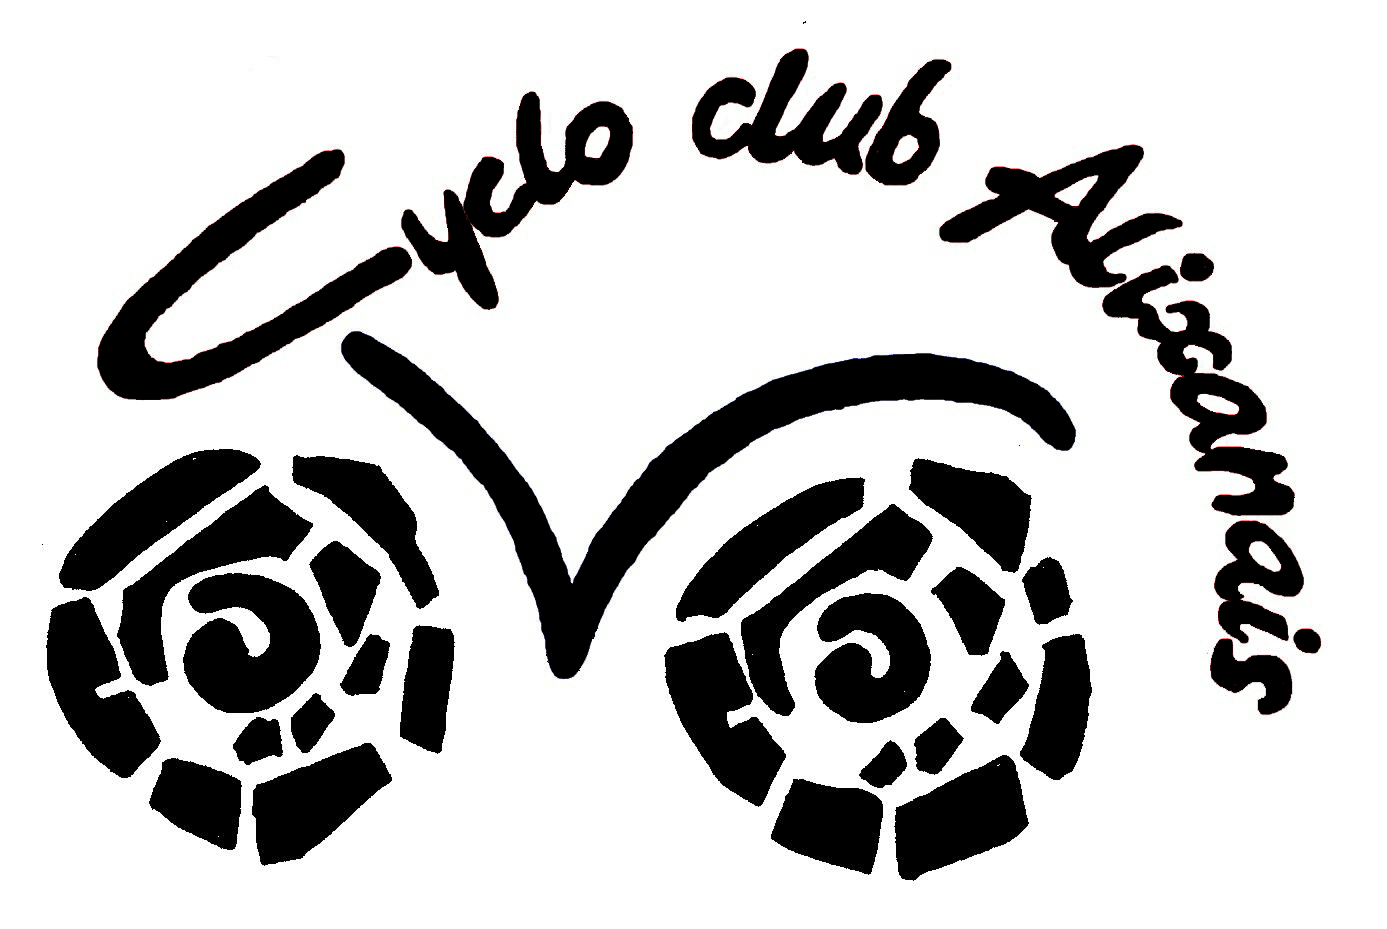 logo cyclo club noir